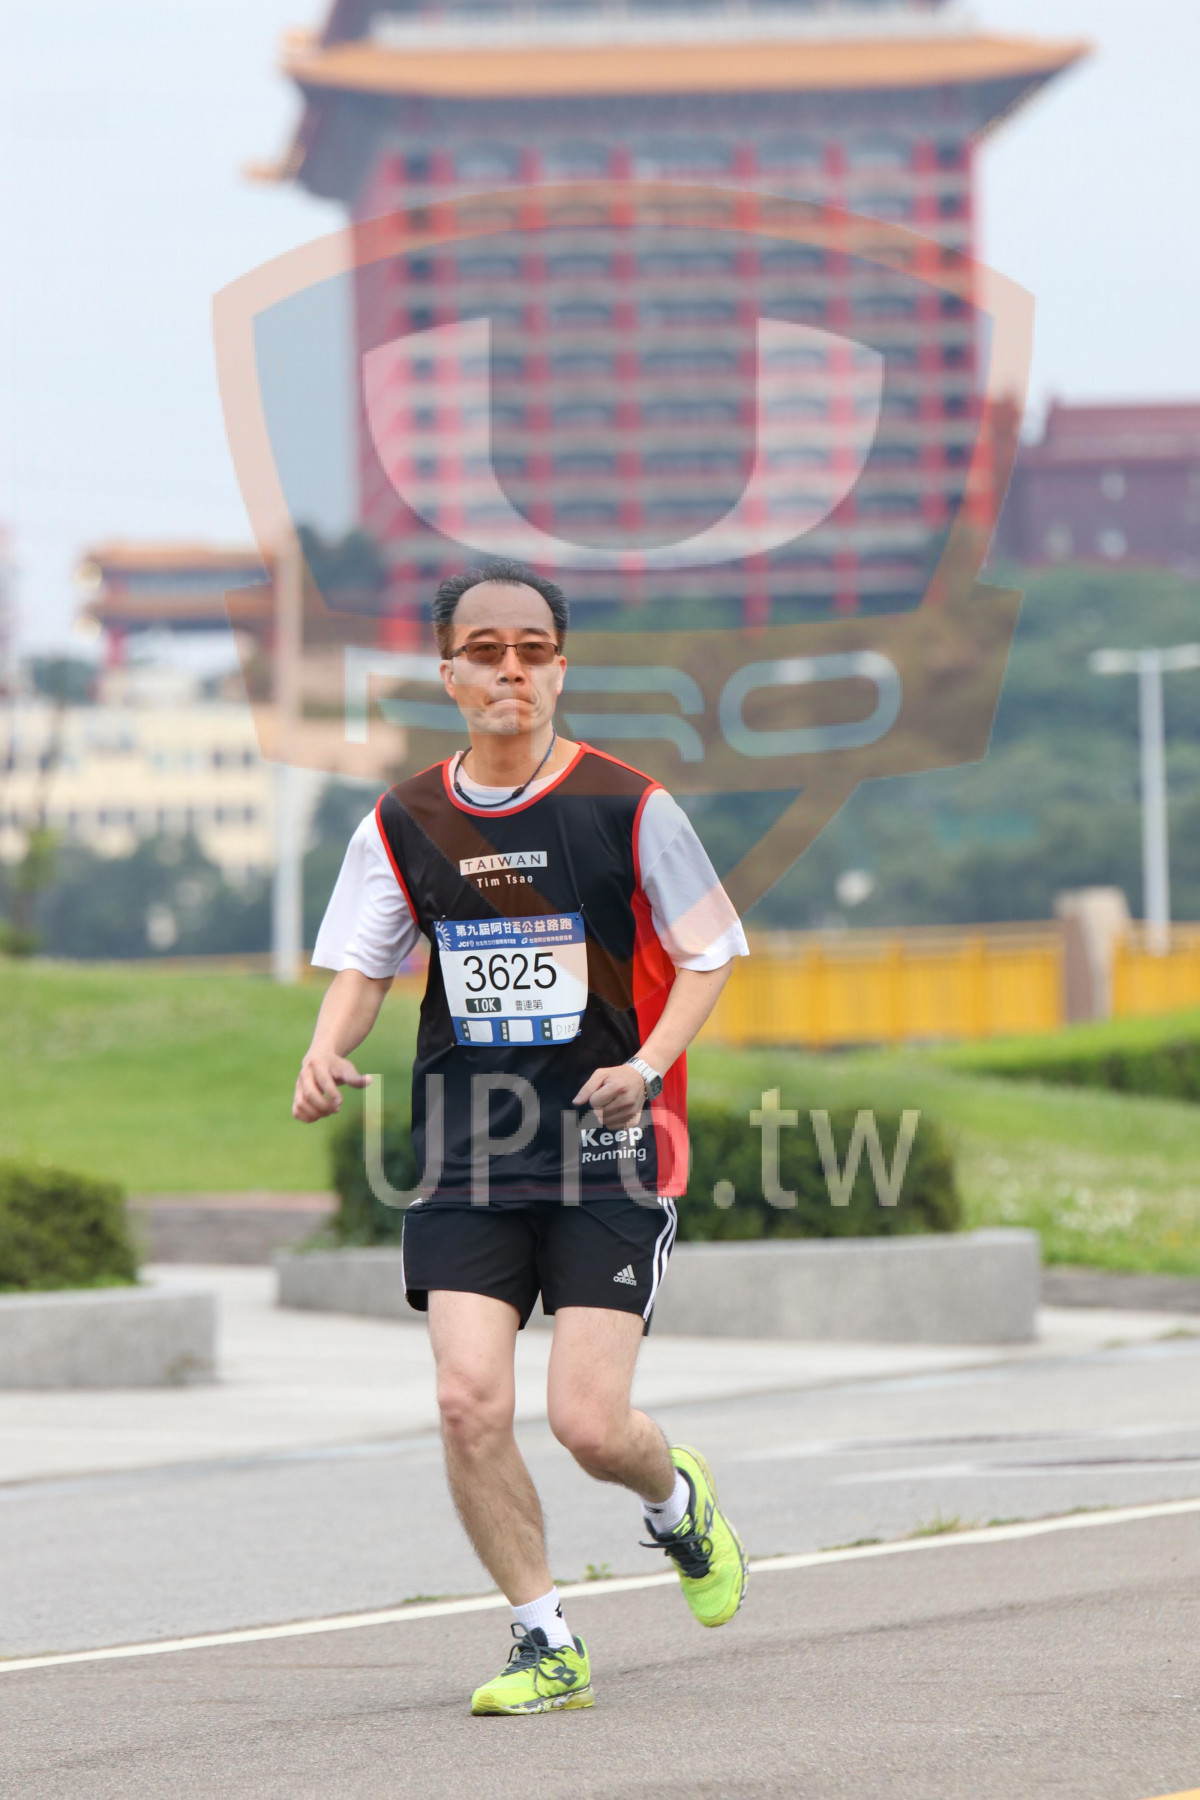 AIWA N,Tim Ts ao,,3625,10k,,Keep,Running|2018 第九屆阿甘盃公益路跑|Soryu Asuka Langley